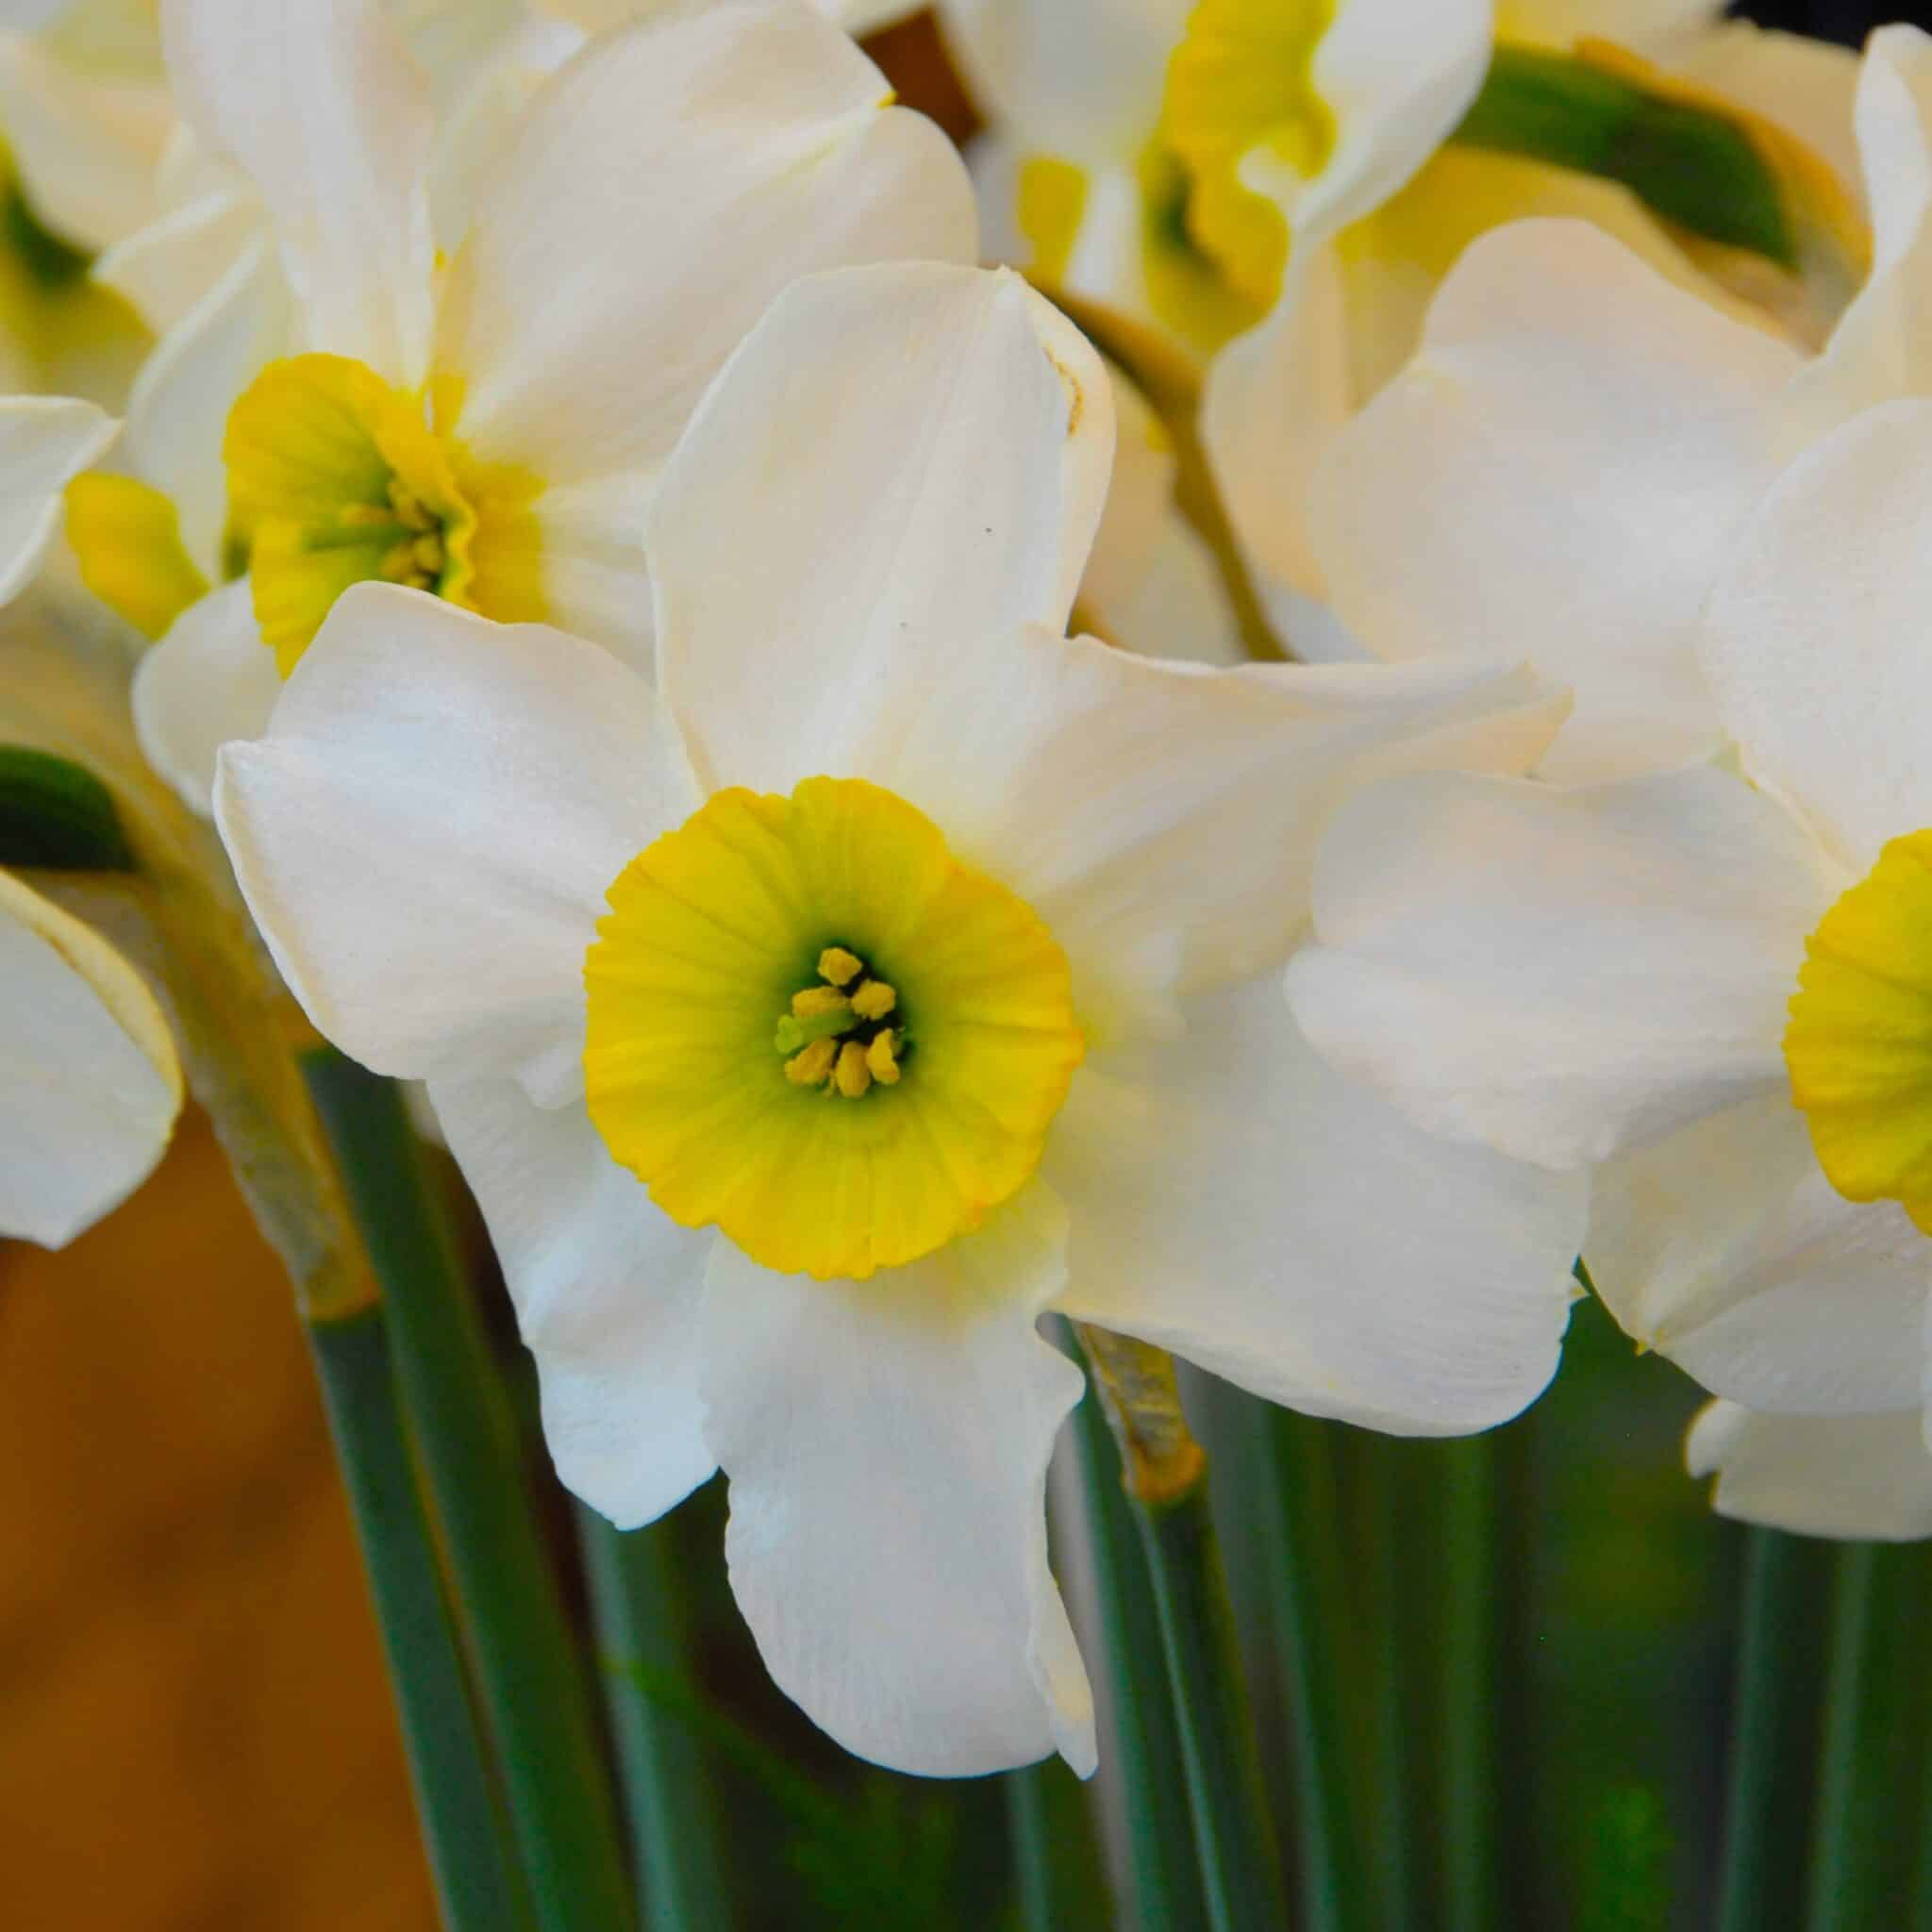 Narcissus 'Sinopel'